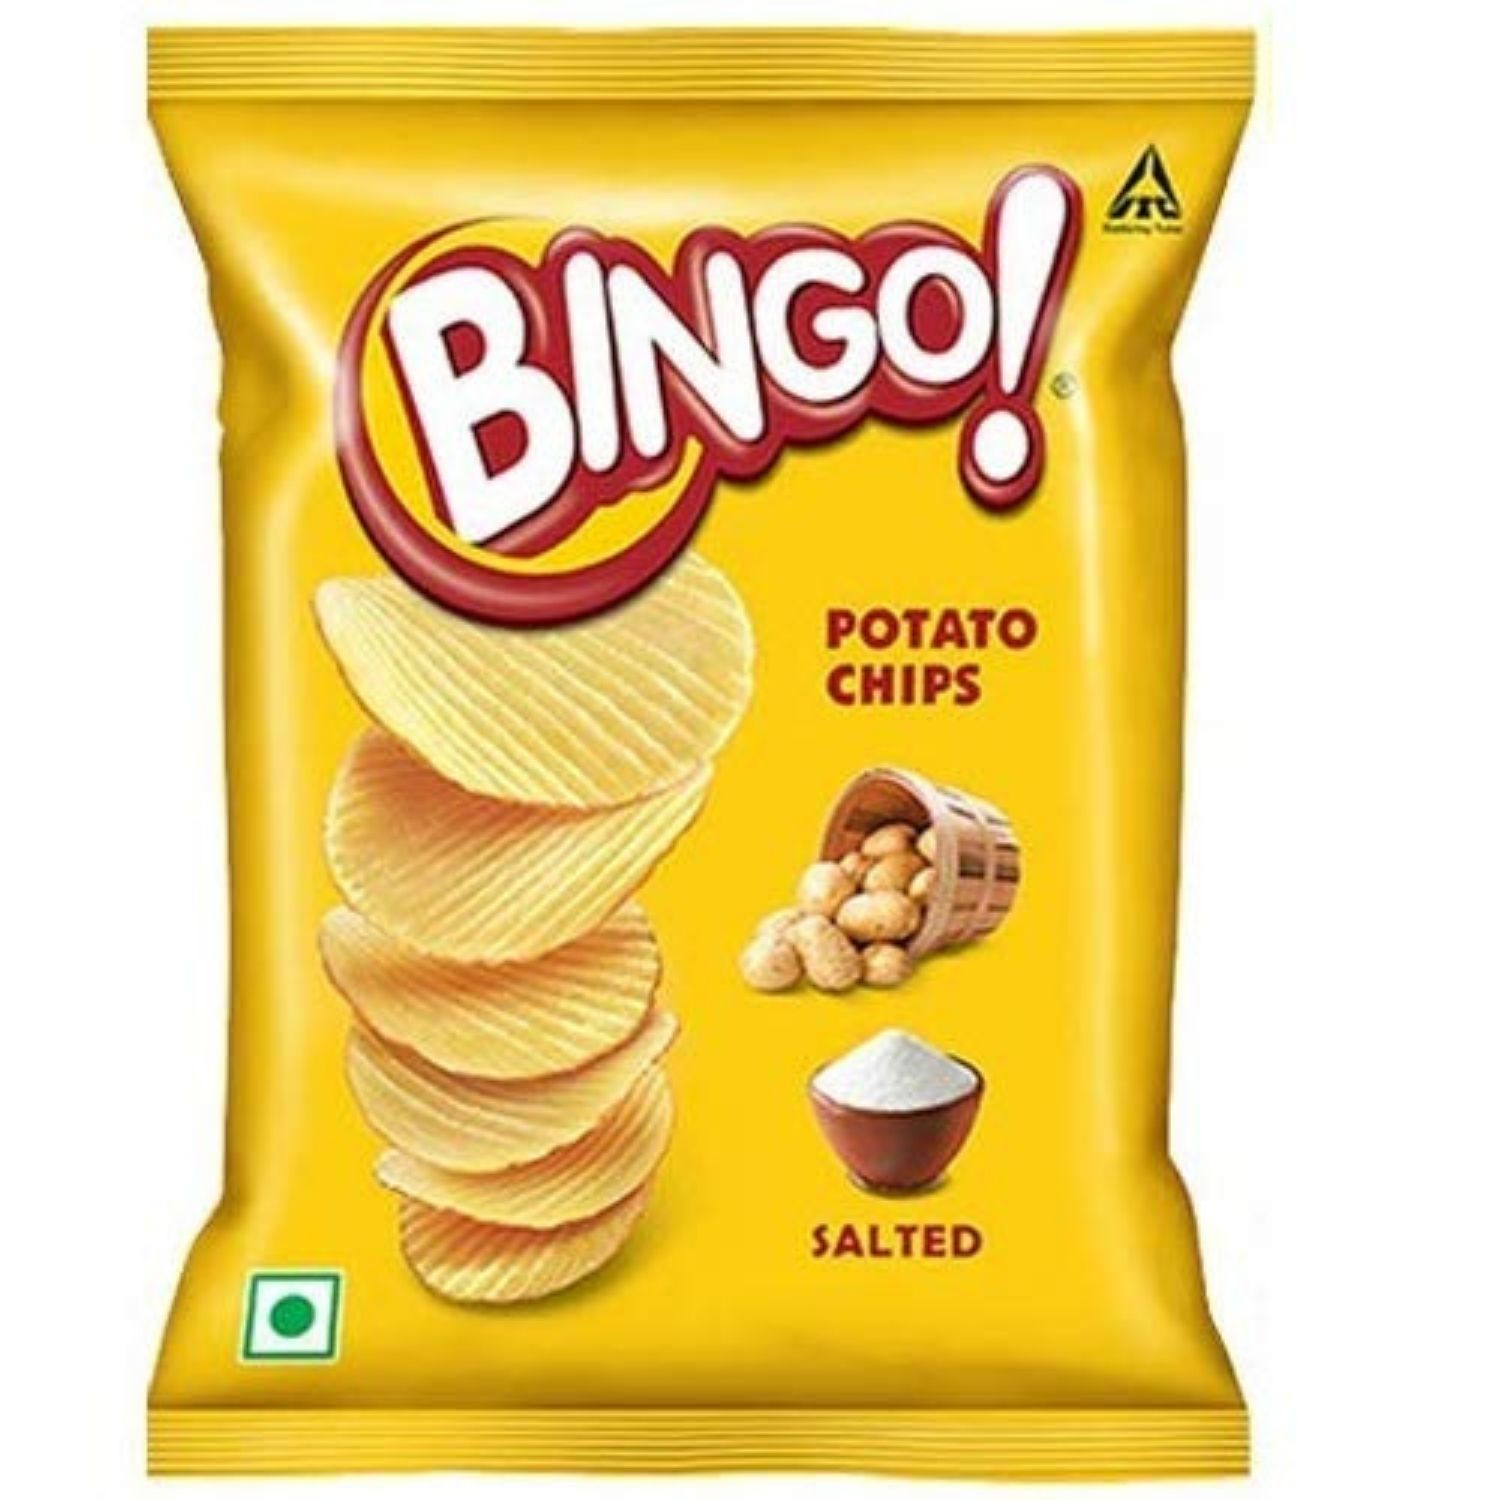 Bingo Masala Potato Chips - Buy 3 Get 1 Free Price - Buy Online at Best  Price in India